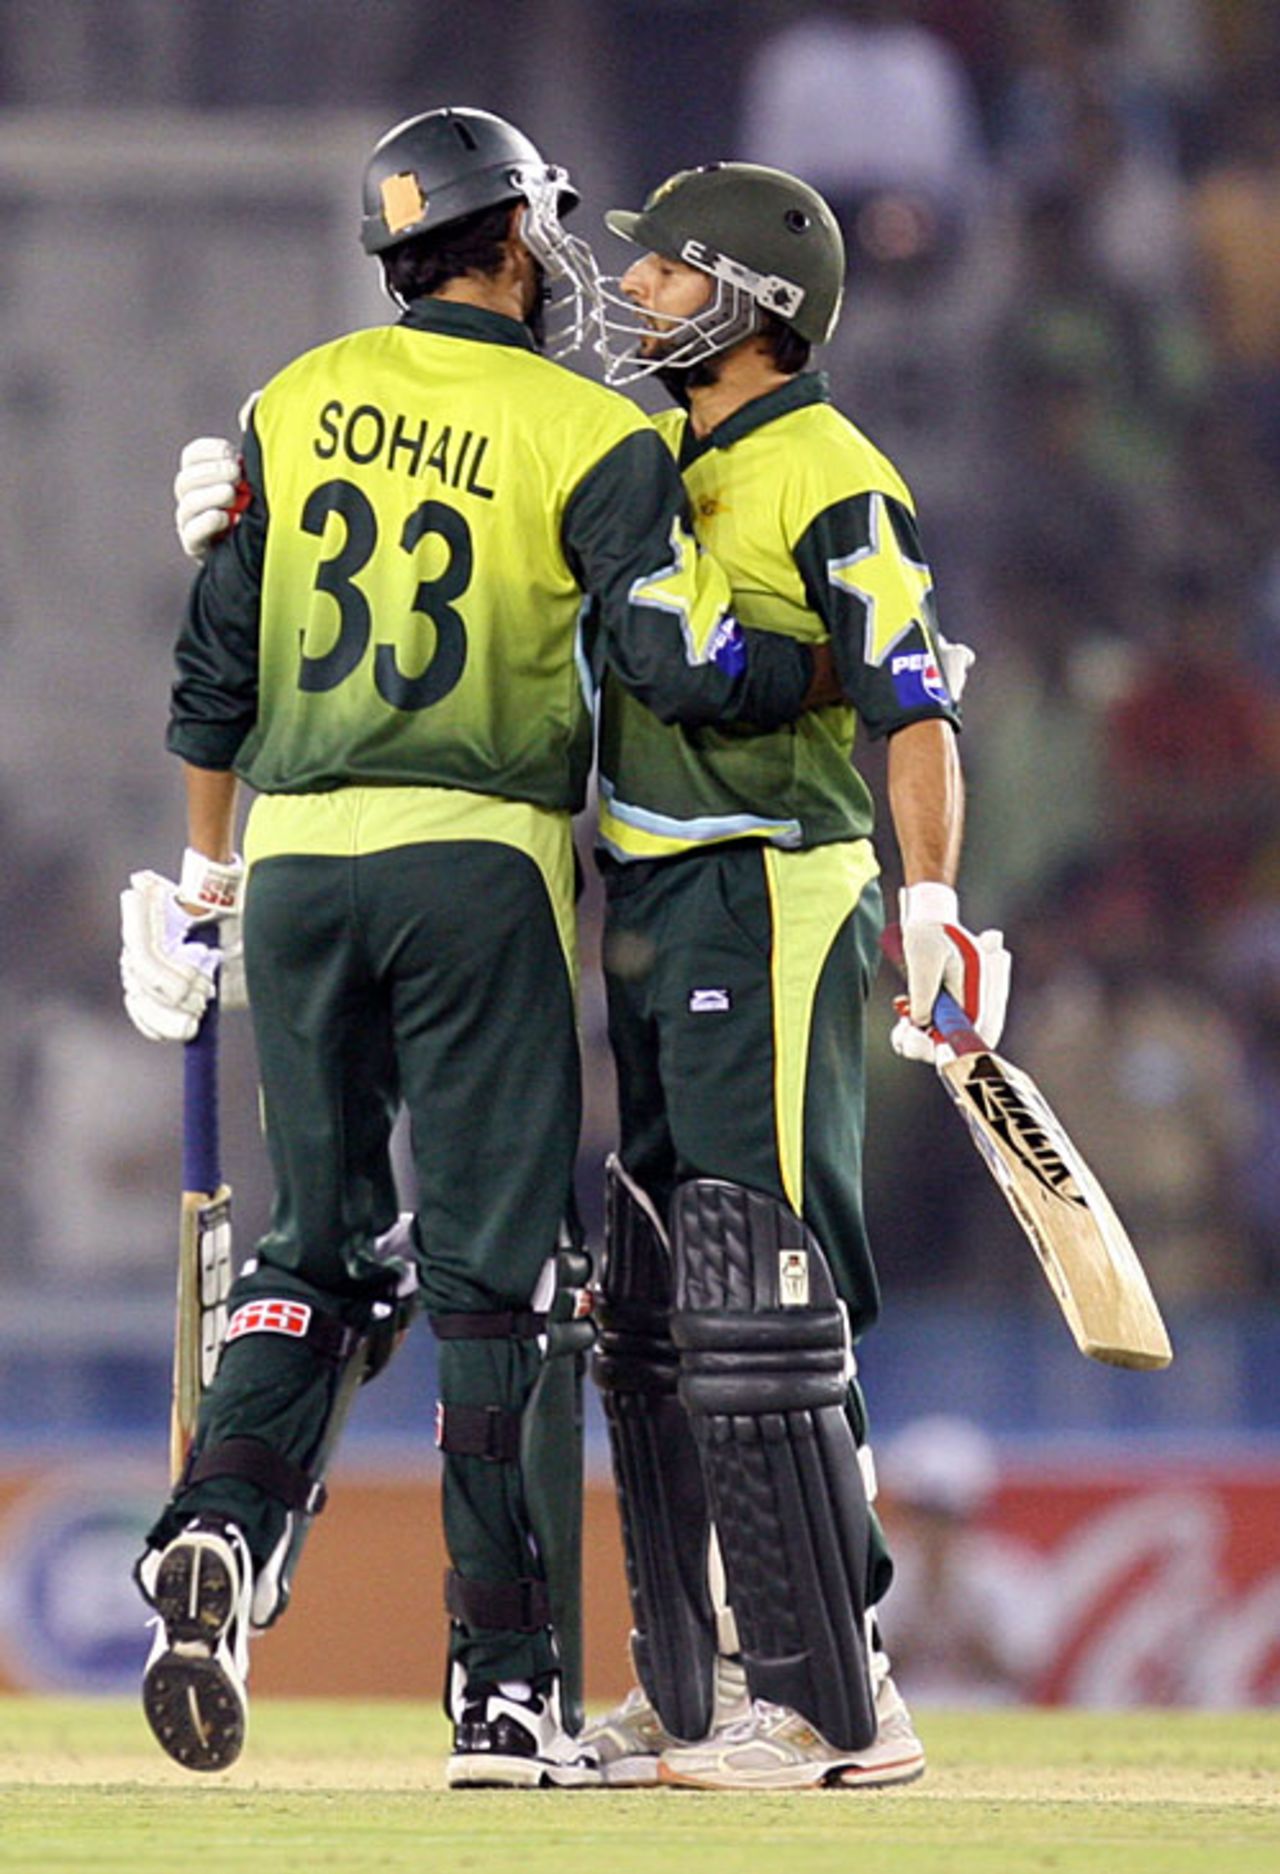 Sohail Tanvir and Shahid Afridi finished off the match for Pakistan, India v Pakistan, 2nd ODI, Mohali, November 8, 2007